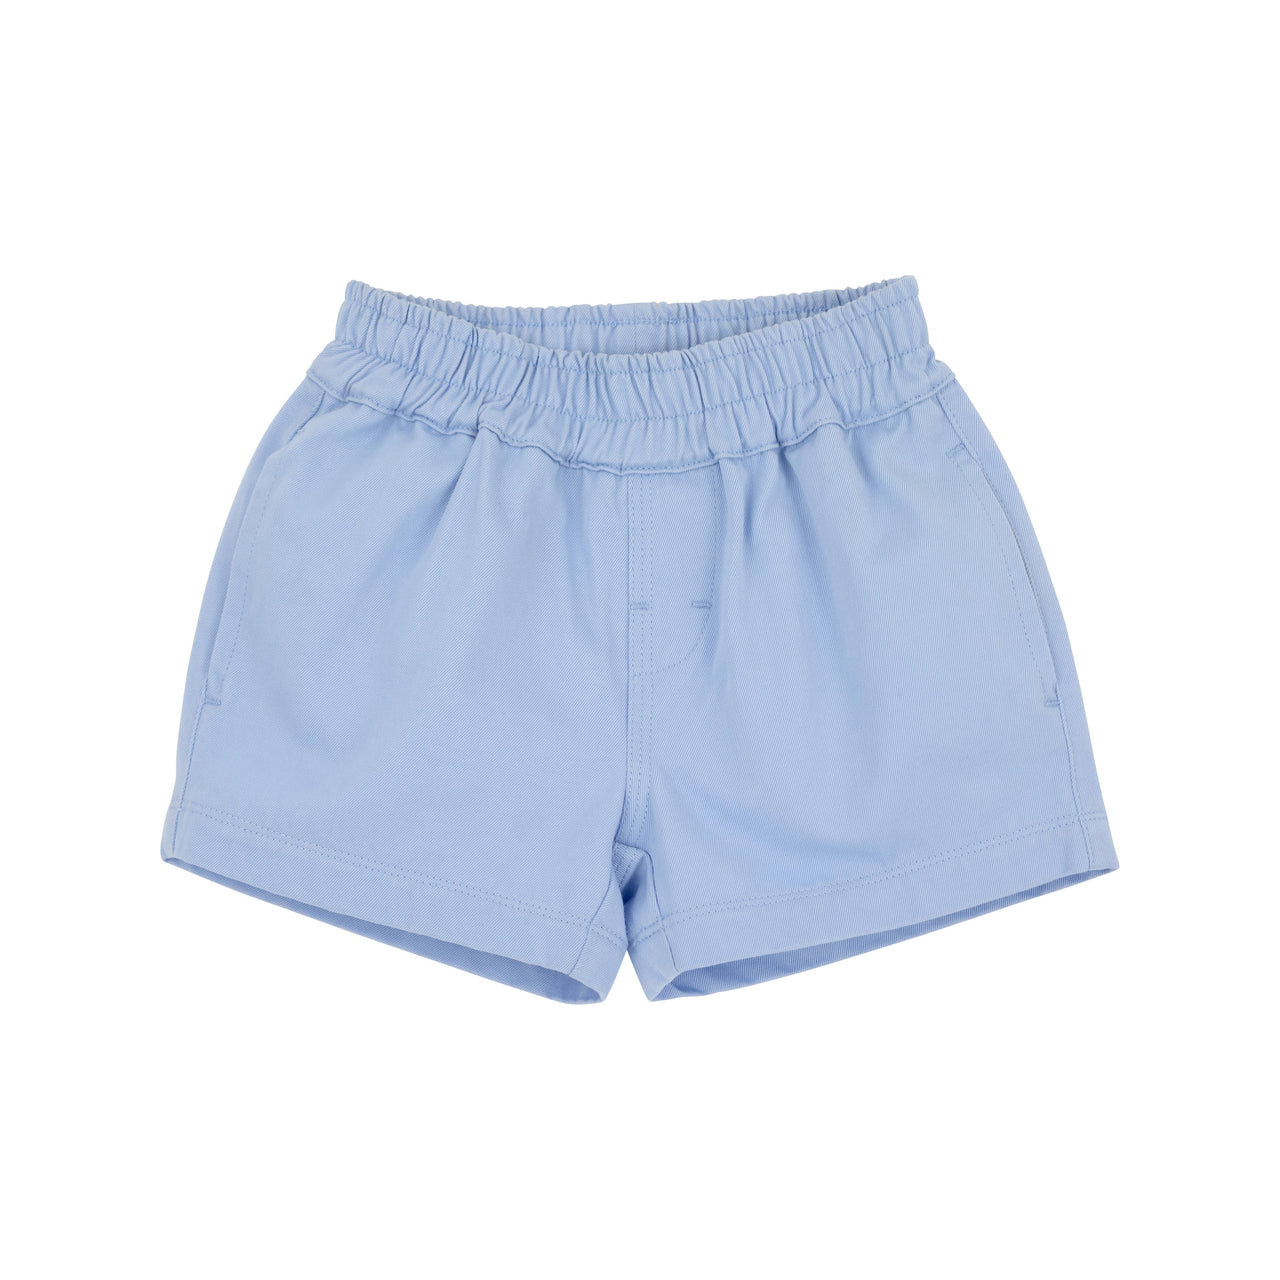 Sheffield Shorts |  Beale Street Blue with Worth Avenue White Stork